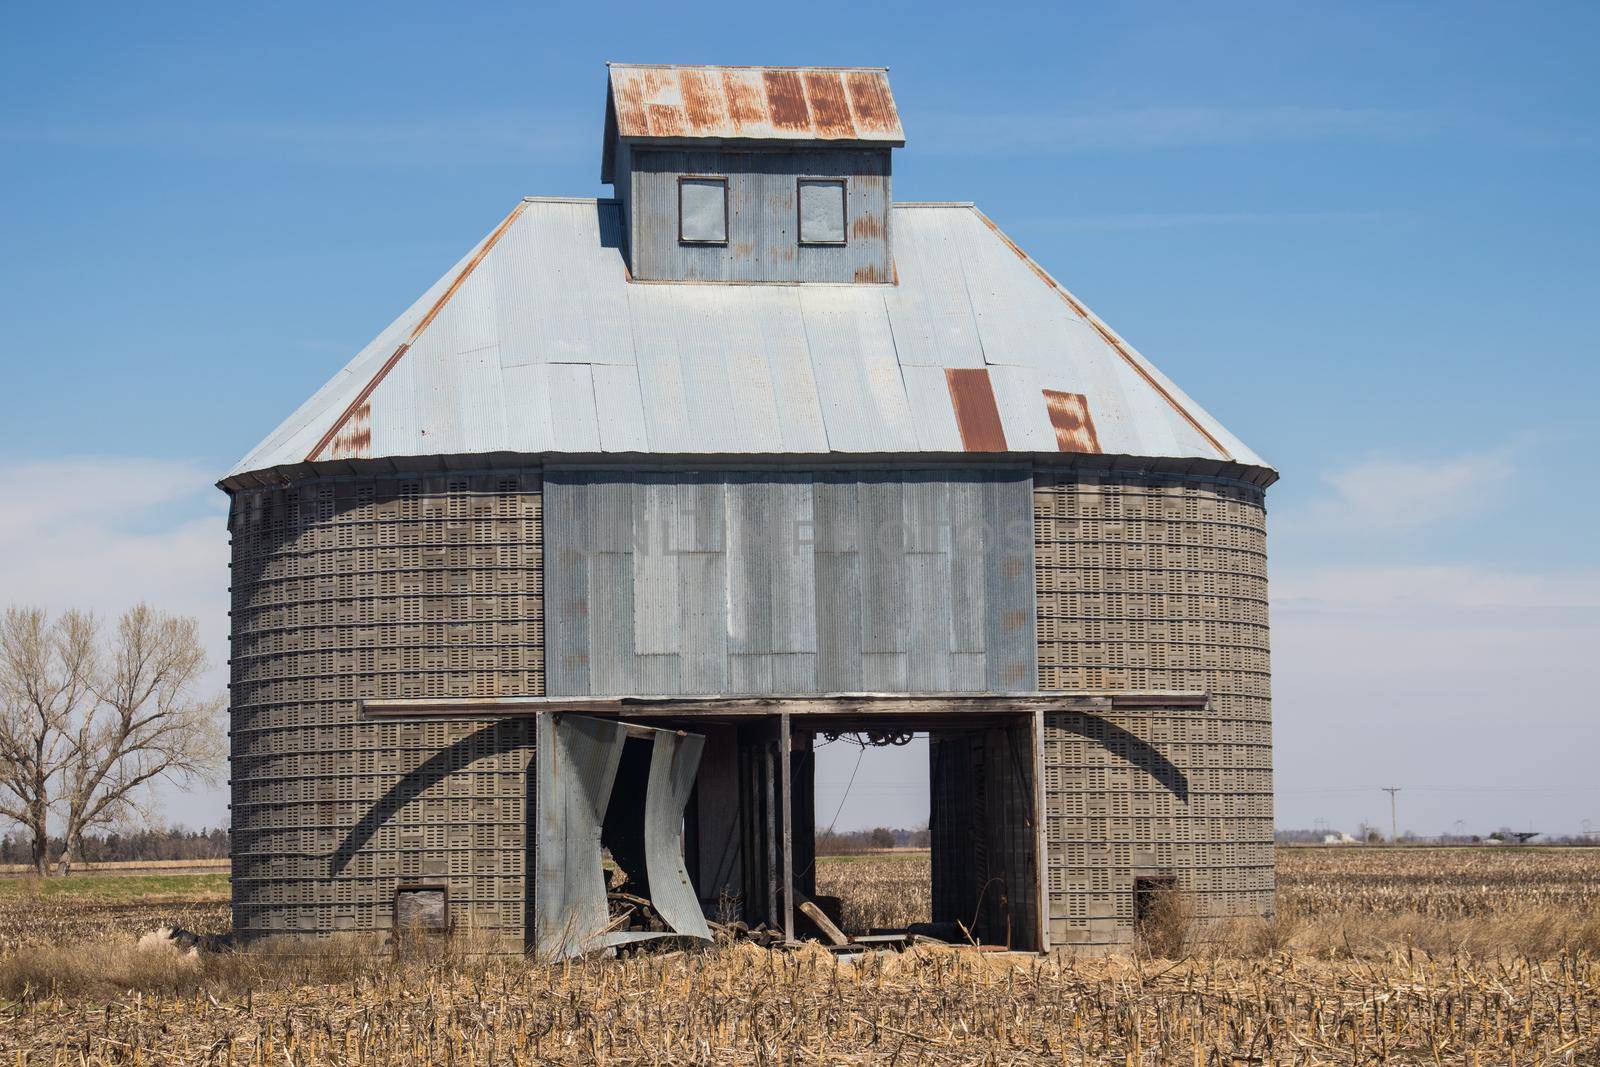 old corn silo or corn crib by clarks Nebraska in a corn field. High quality photo